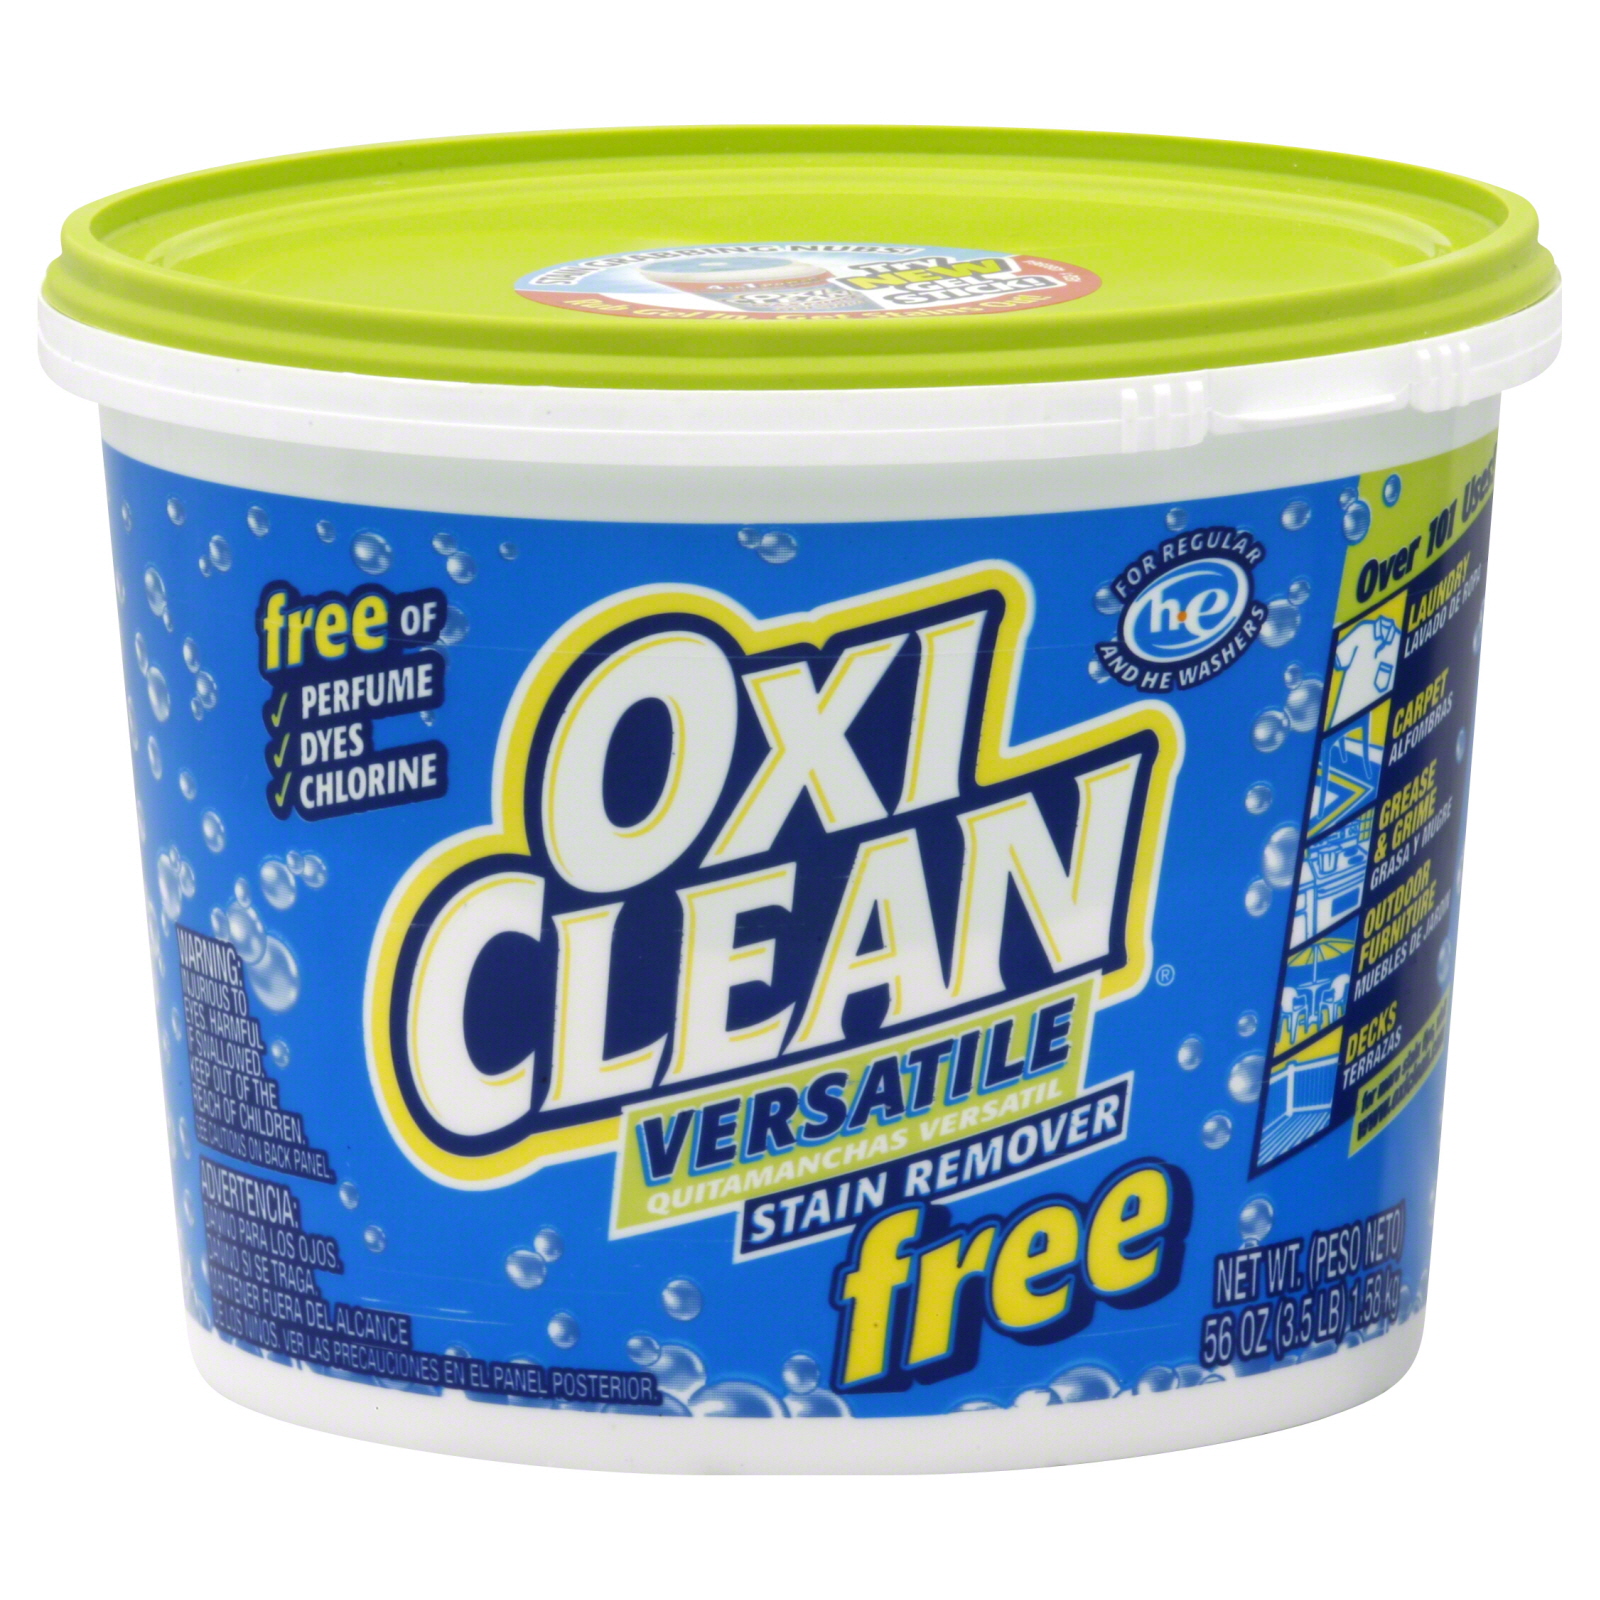 Oxi Clean Stain Remover, Versatile, Free, 56 oz (3.5 lb) 1.58 kg